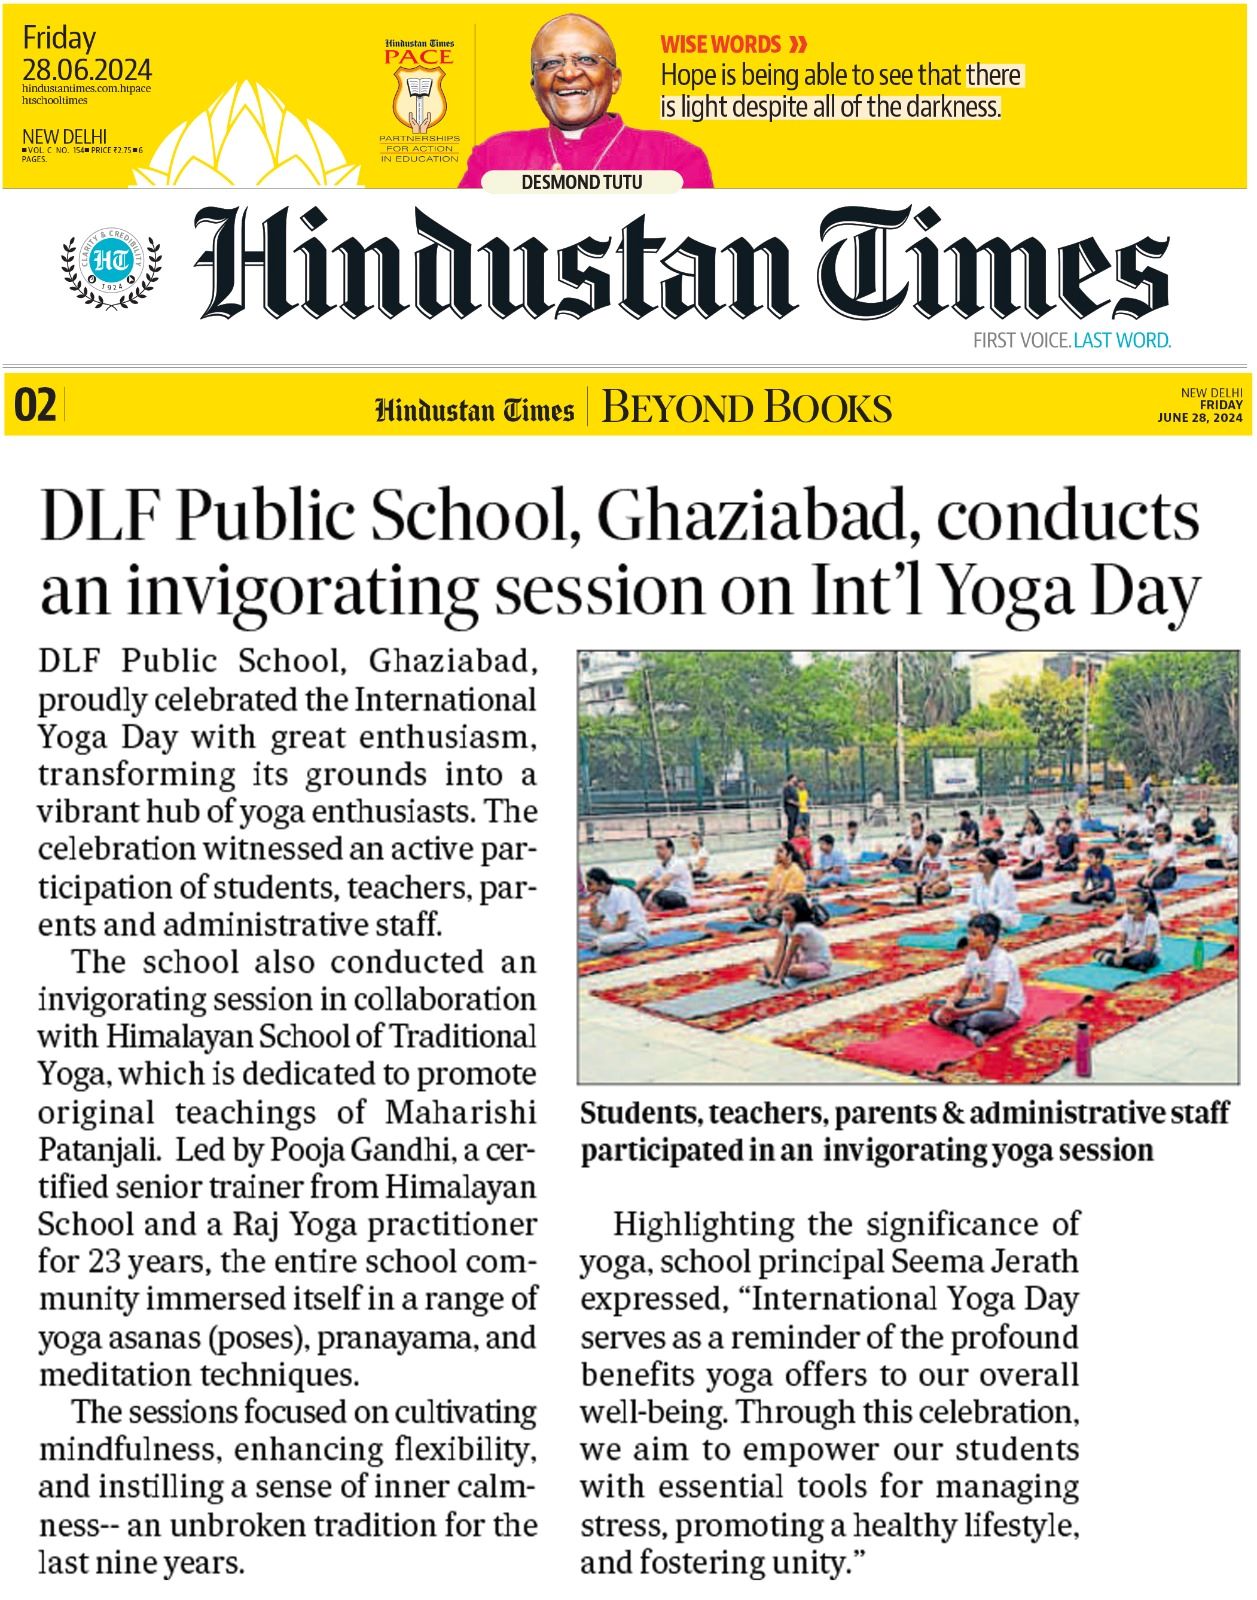  DLF Public School conducts an invigorating session on International Yoga Day